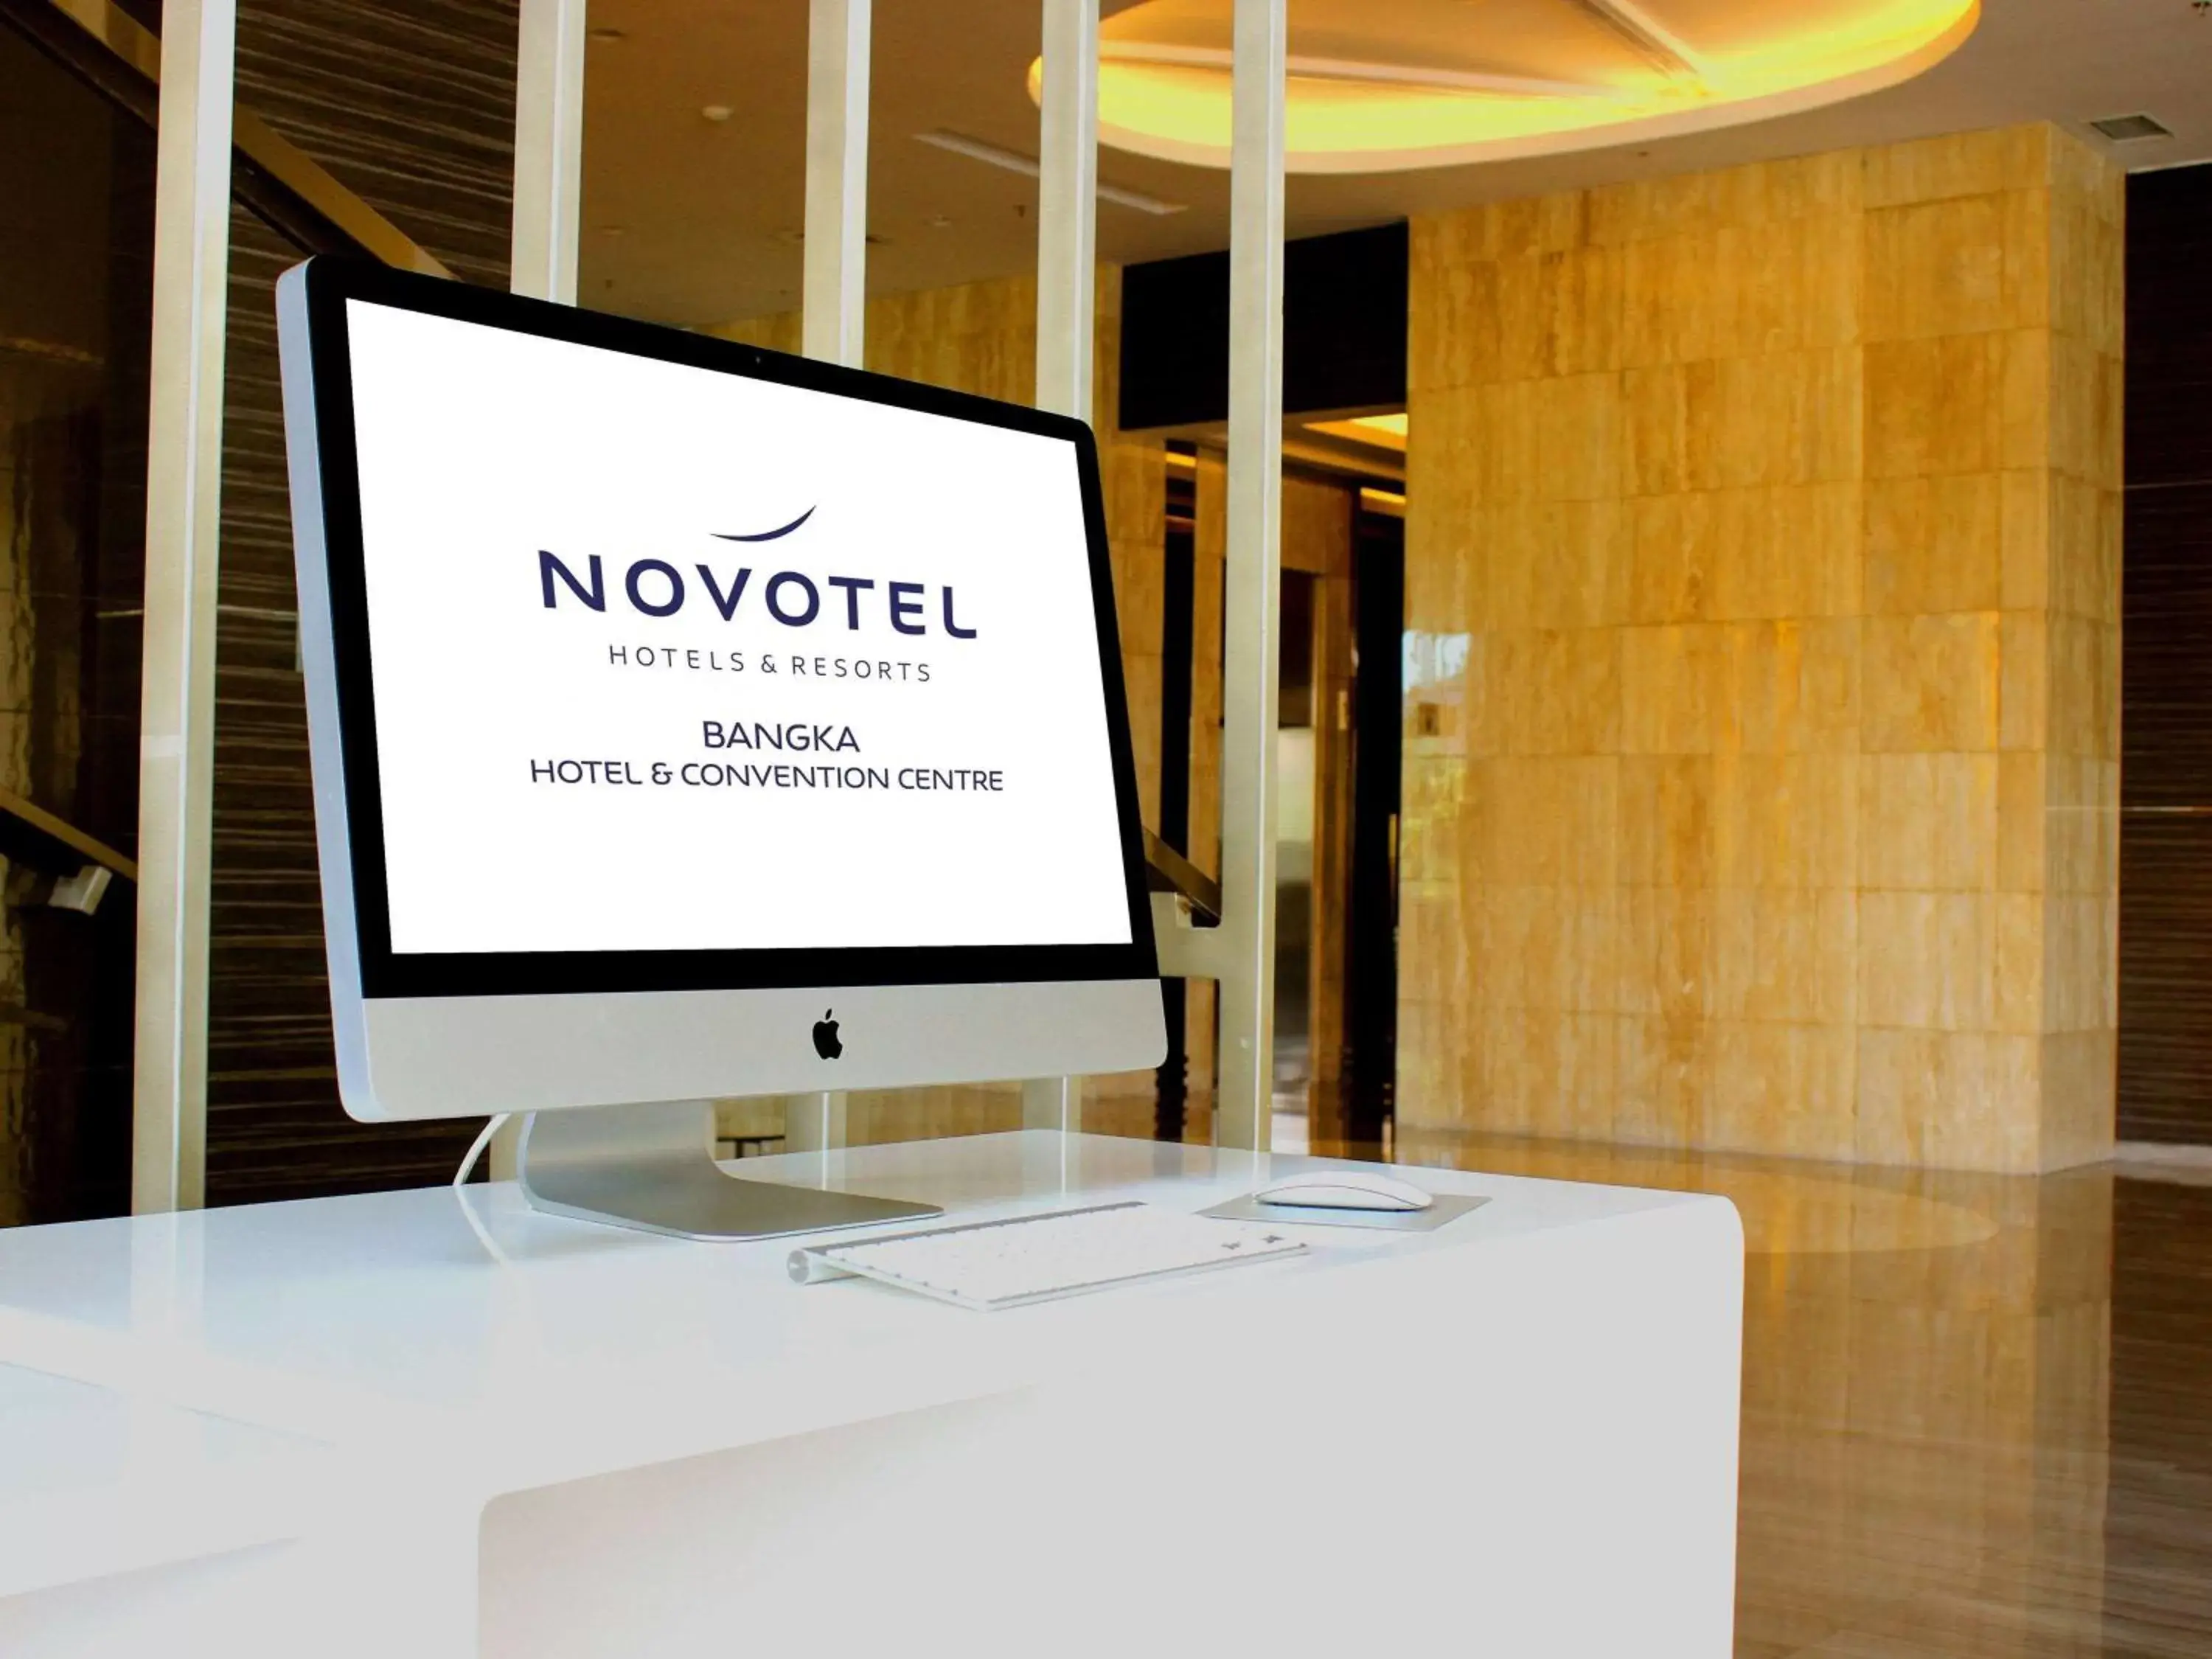 On site in Novotel Bangka Hotel & Convention Center